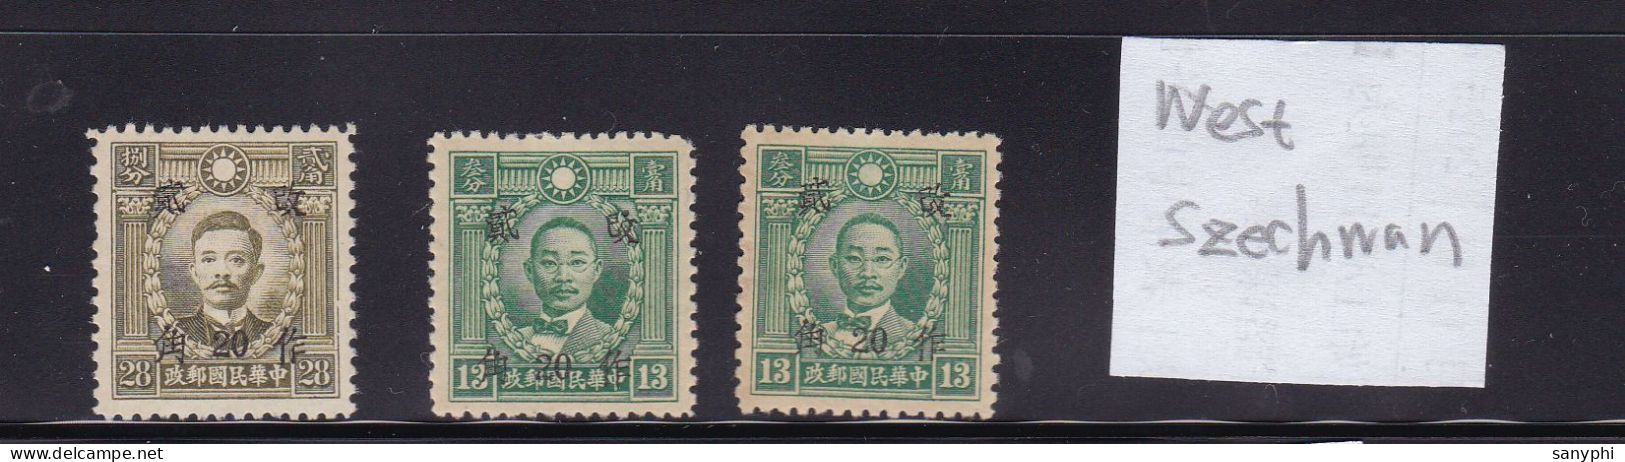 China Republic Martyt Provincial Ovpts 3 Unused Stamps-West Szechwan - 1912-1949 República